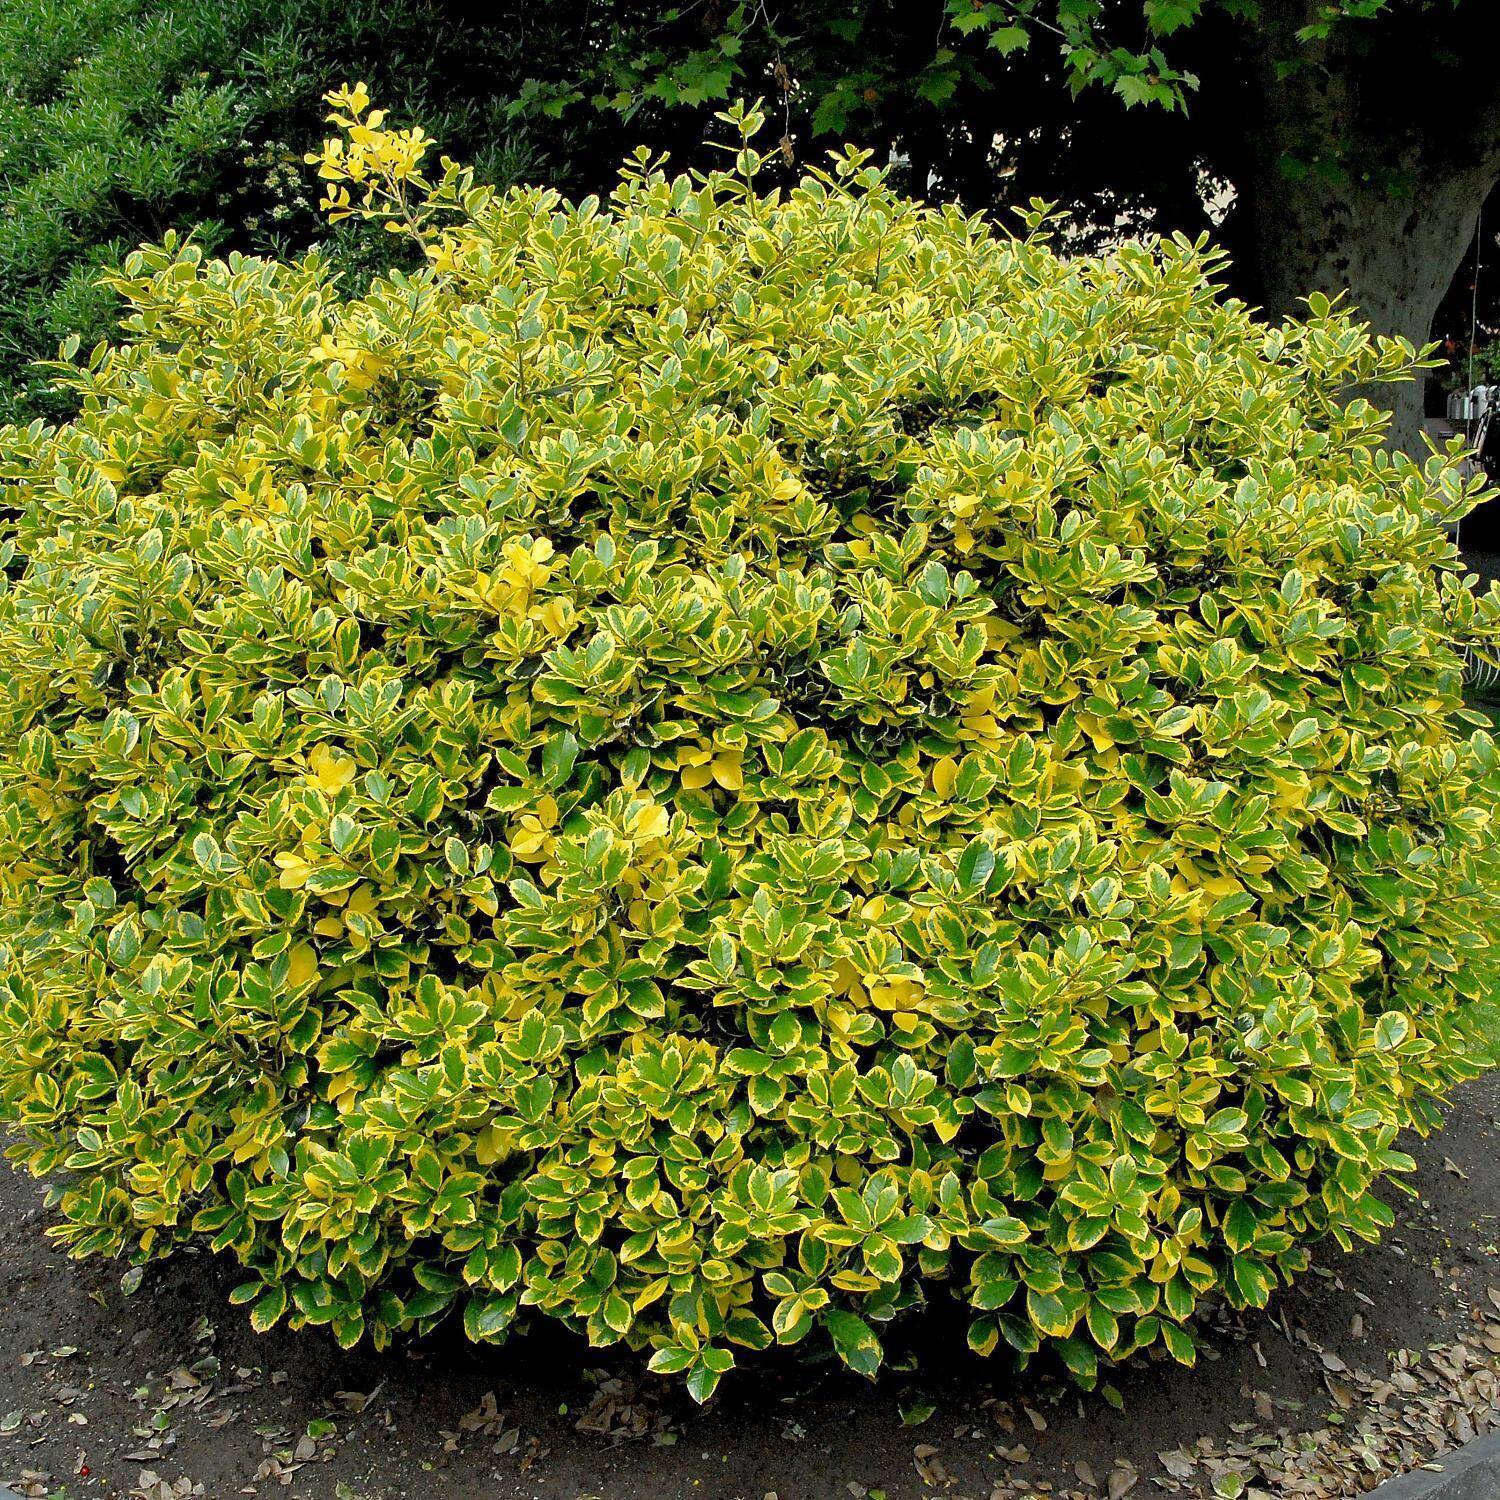 Laubbäume - Gelbbunte Stechpalme 'Golden van Tol' - Ilex aquifolium 'Golden van Tol'